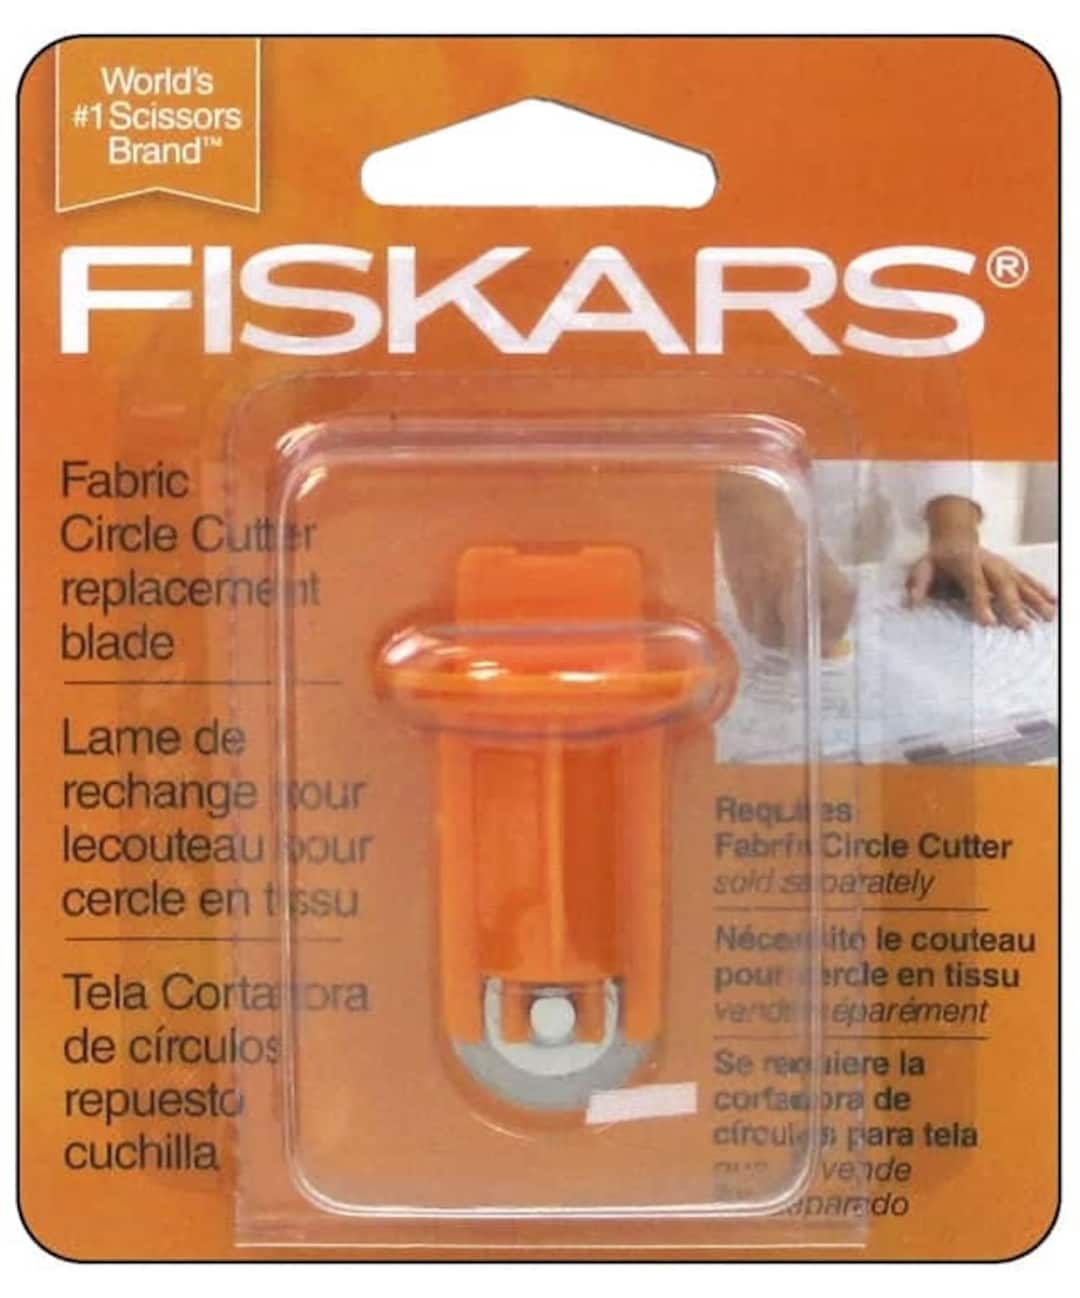 Fiskars 177510-1001 Style K Cutting / Scoring Trimmer Blade